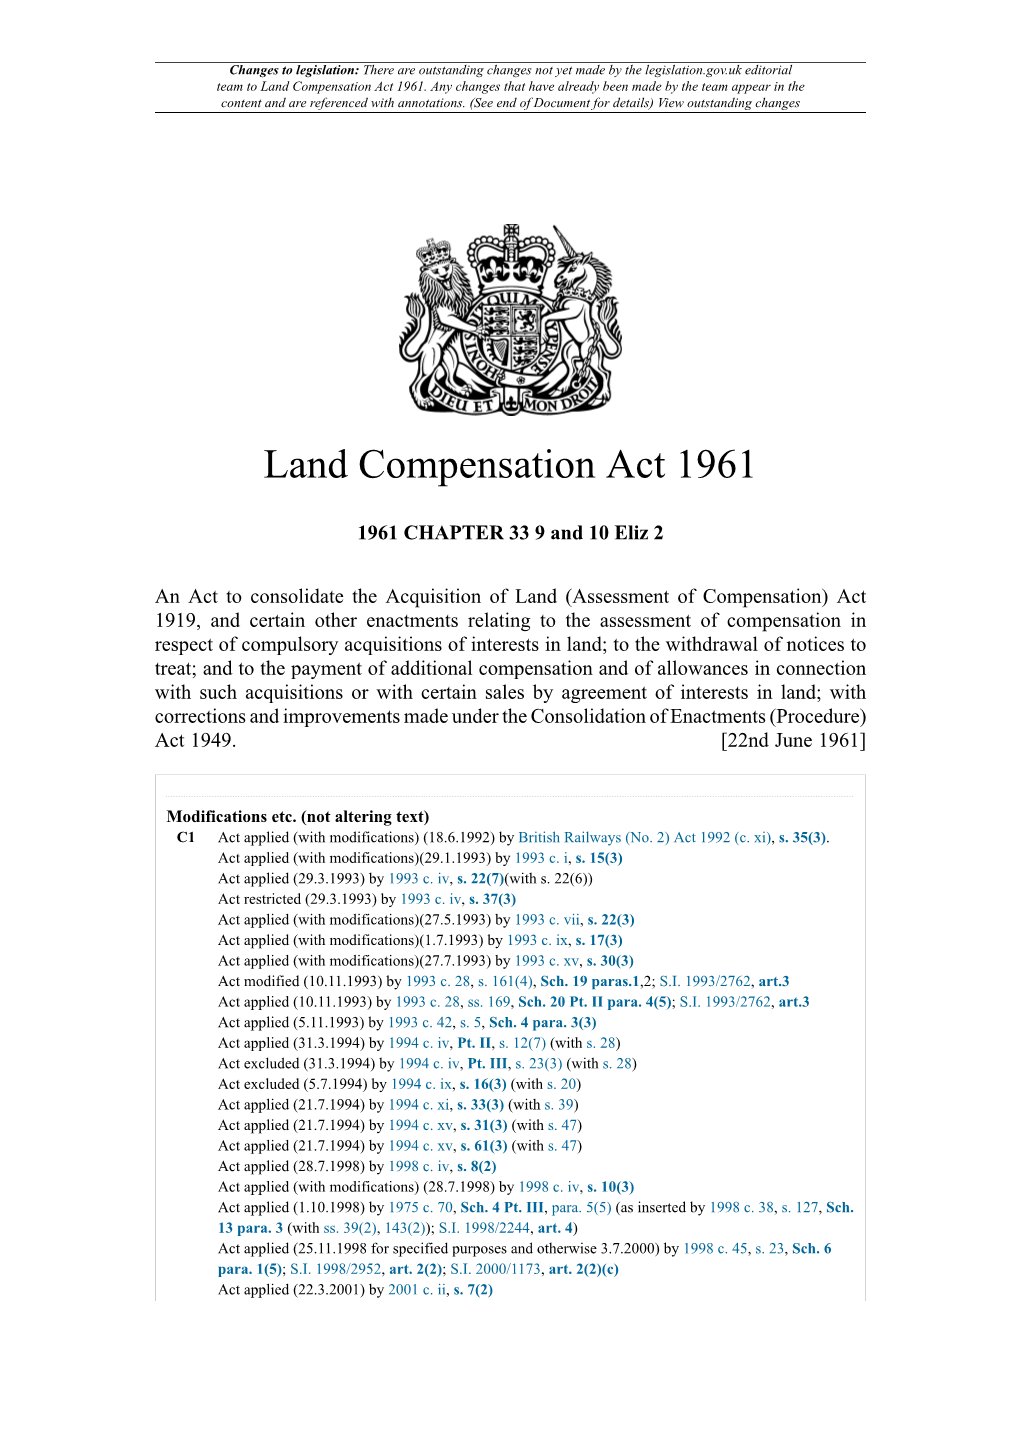 Land Compensation Act 1961